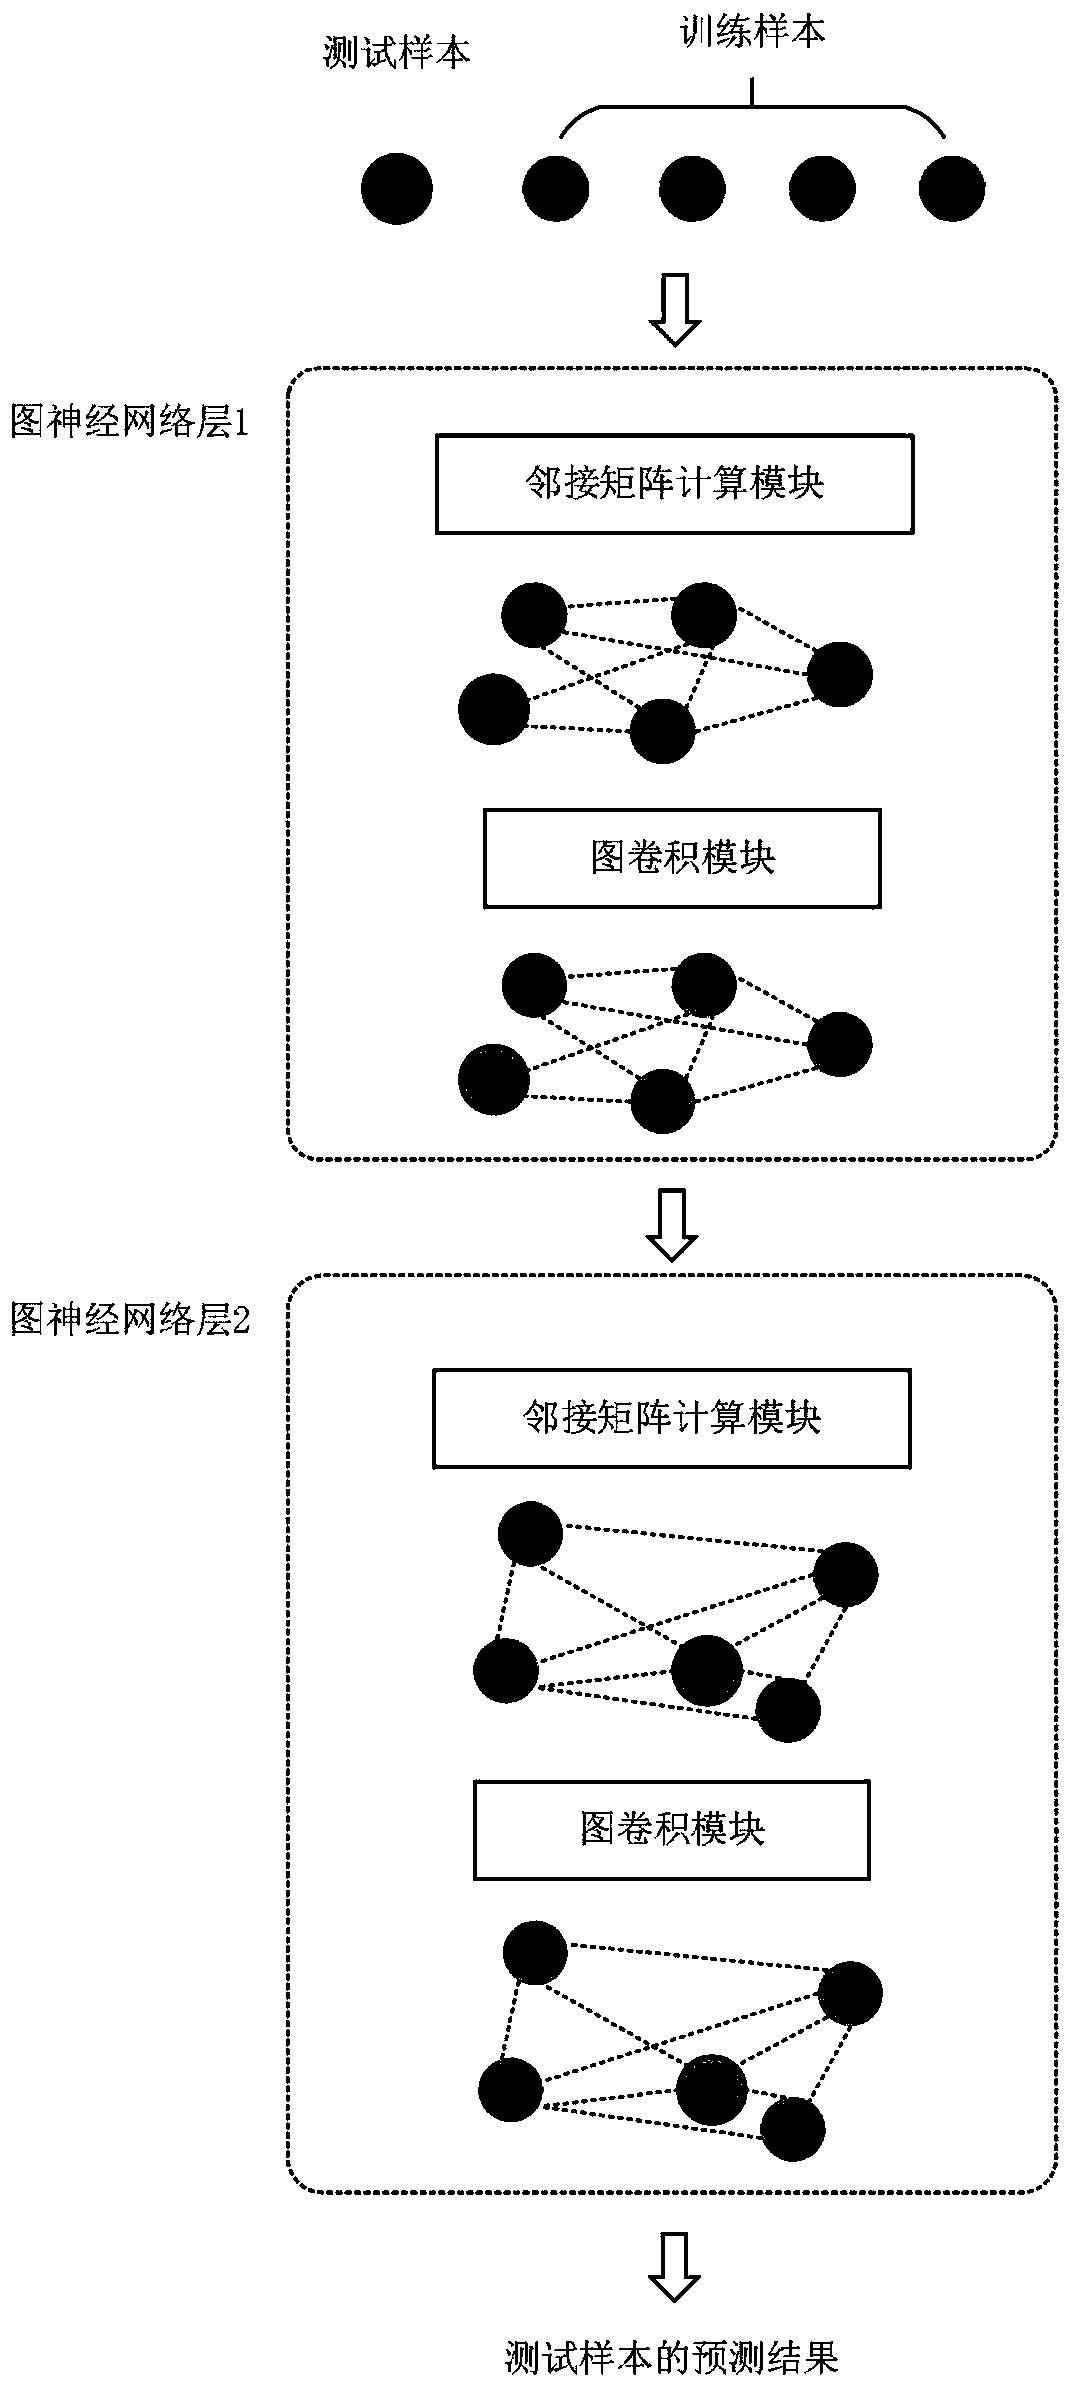 Communication signal modulation mode identification method based on graph neural network